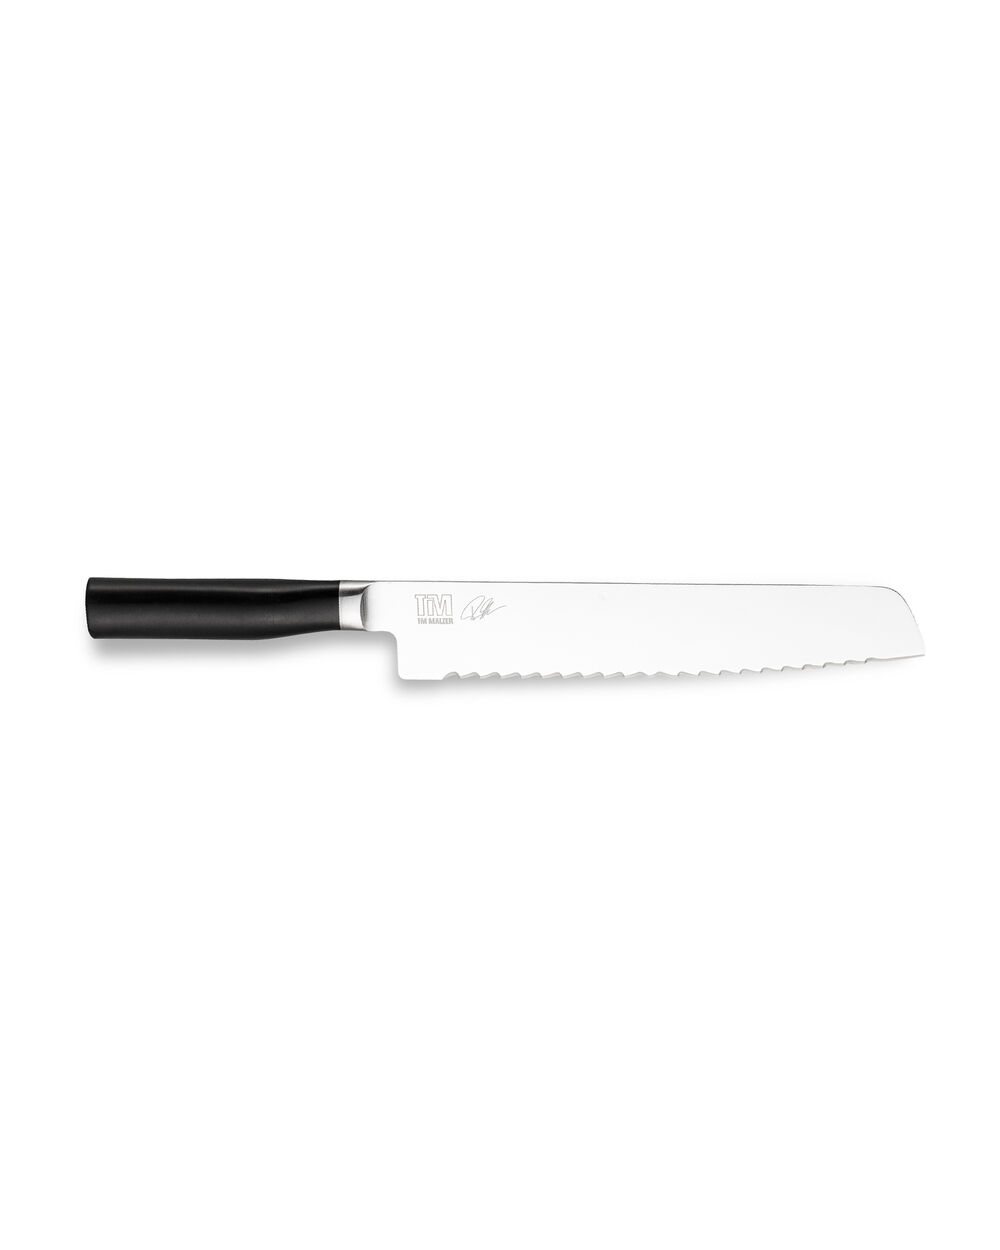 Нож хлебный KAI Камагата 23 см, кованая сталь, ручка пластик - фото 1